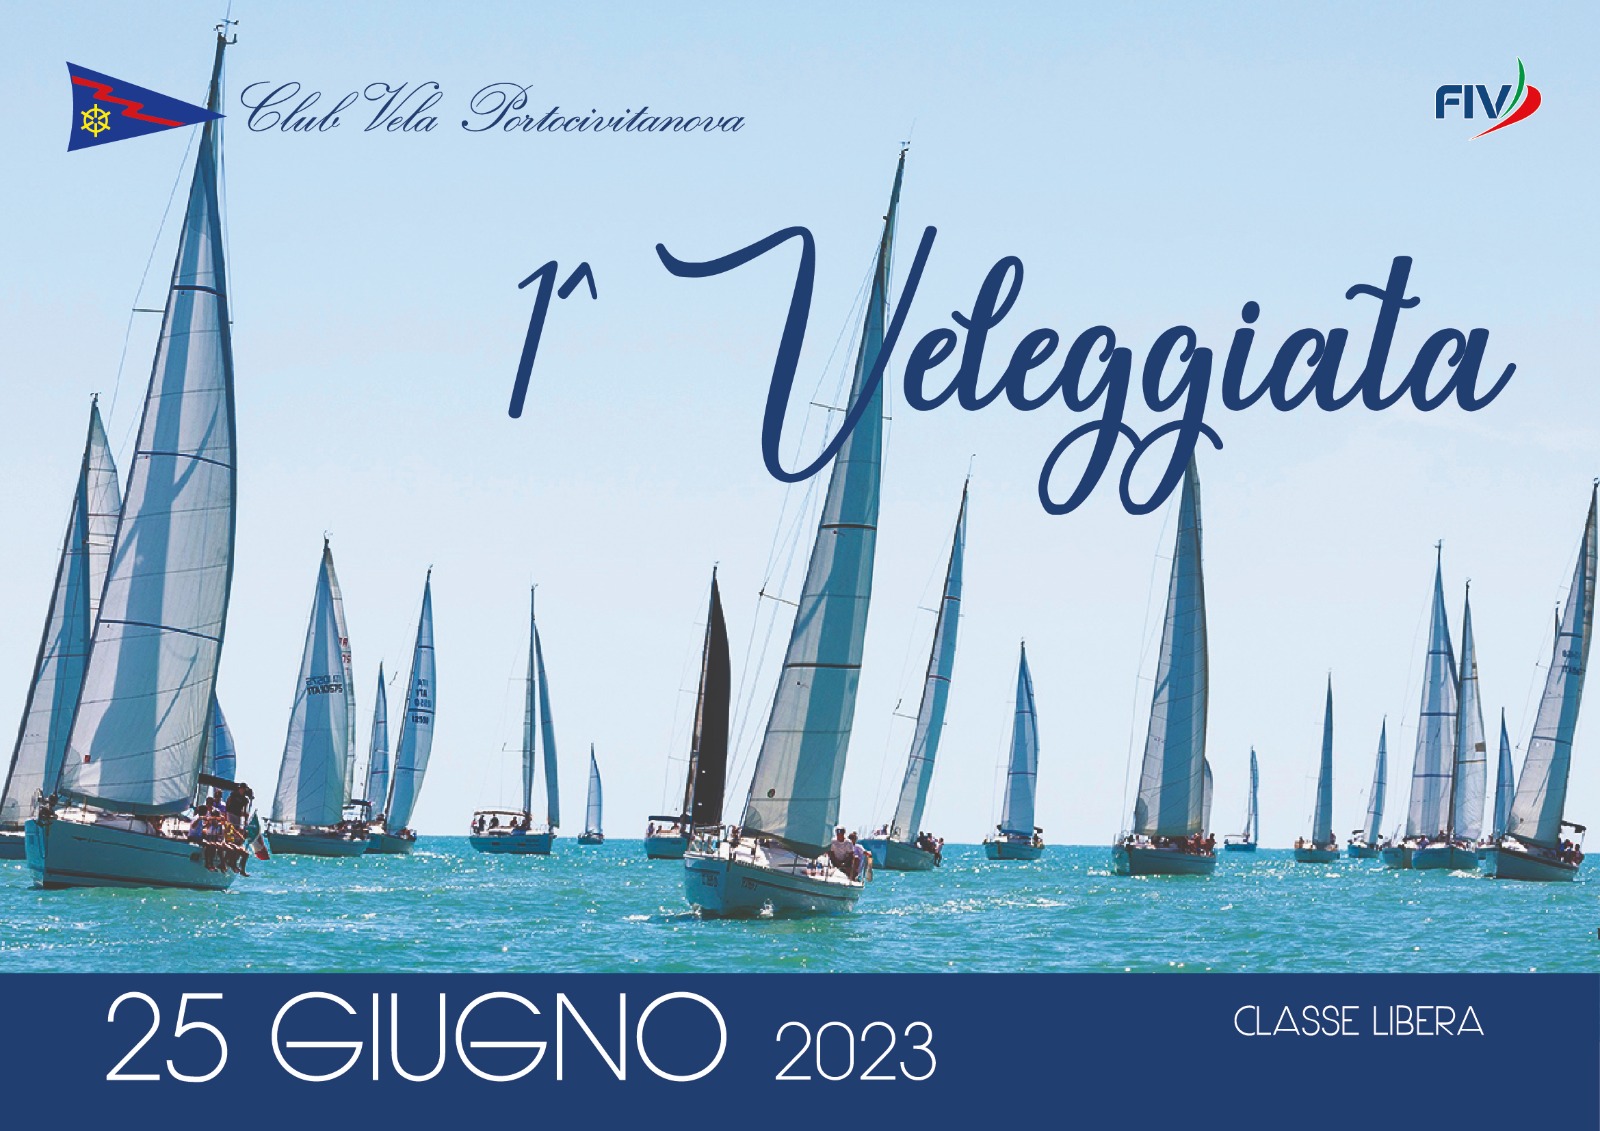 25 giugno 2023 – VELEGGIATA (classe libera)